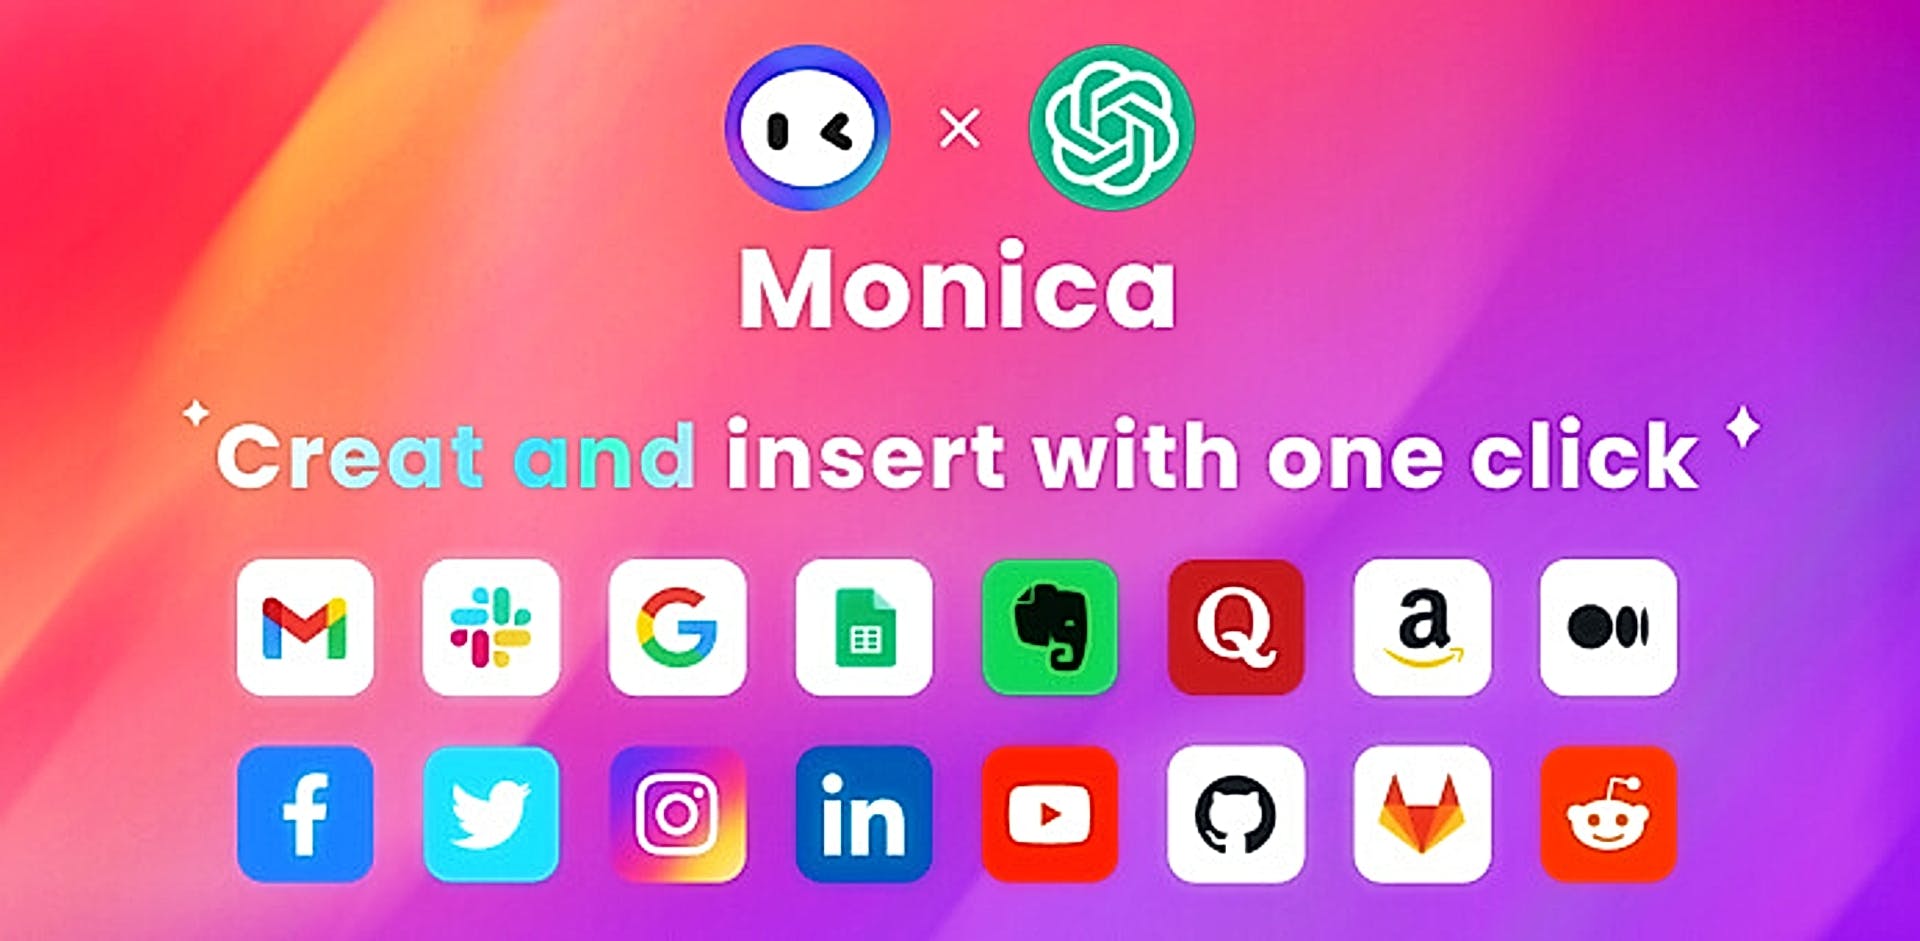 Monica featured